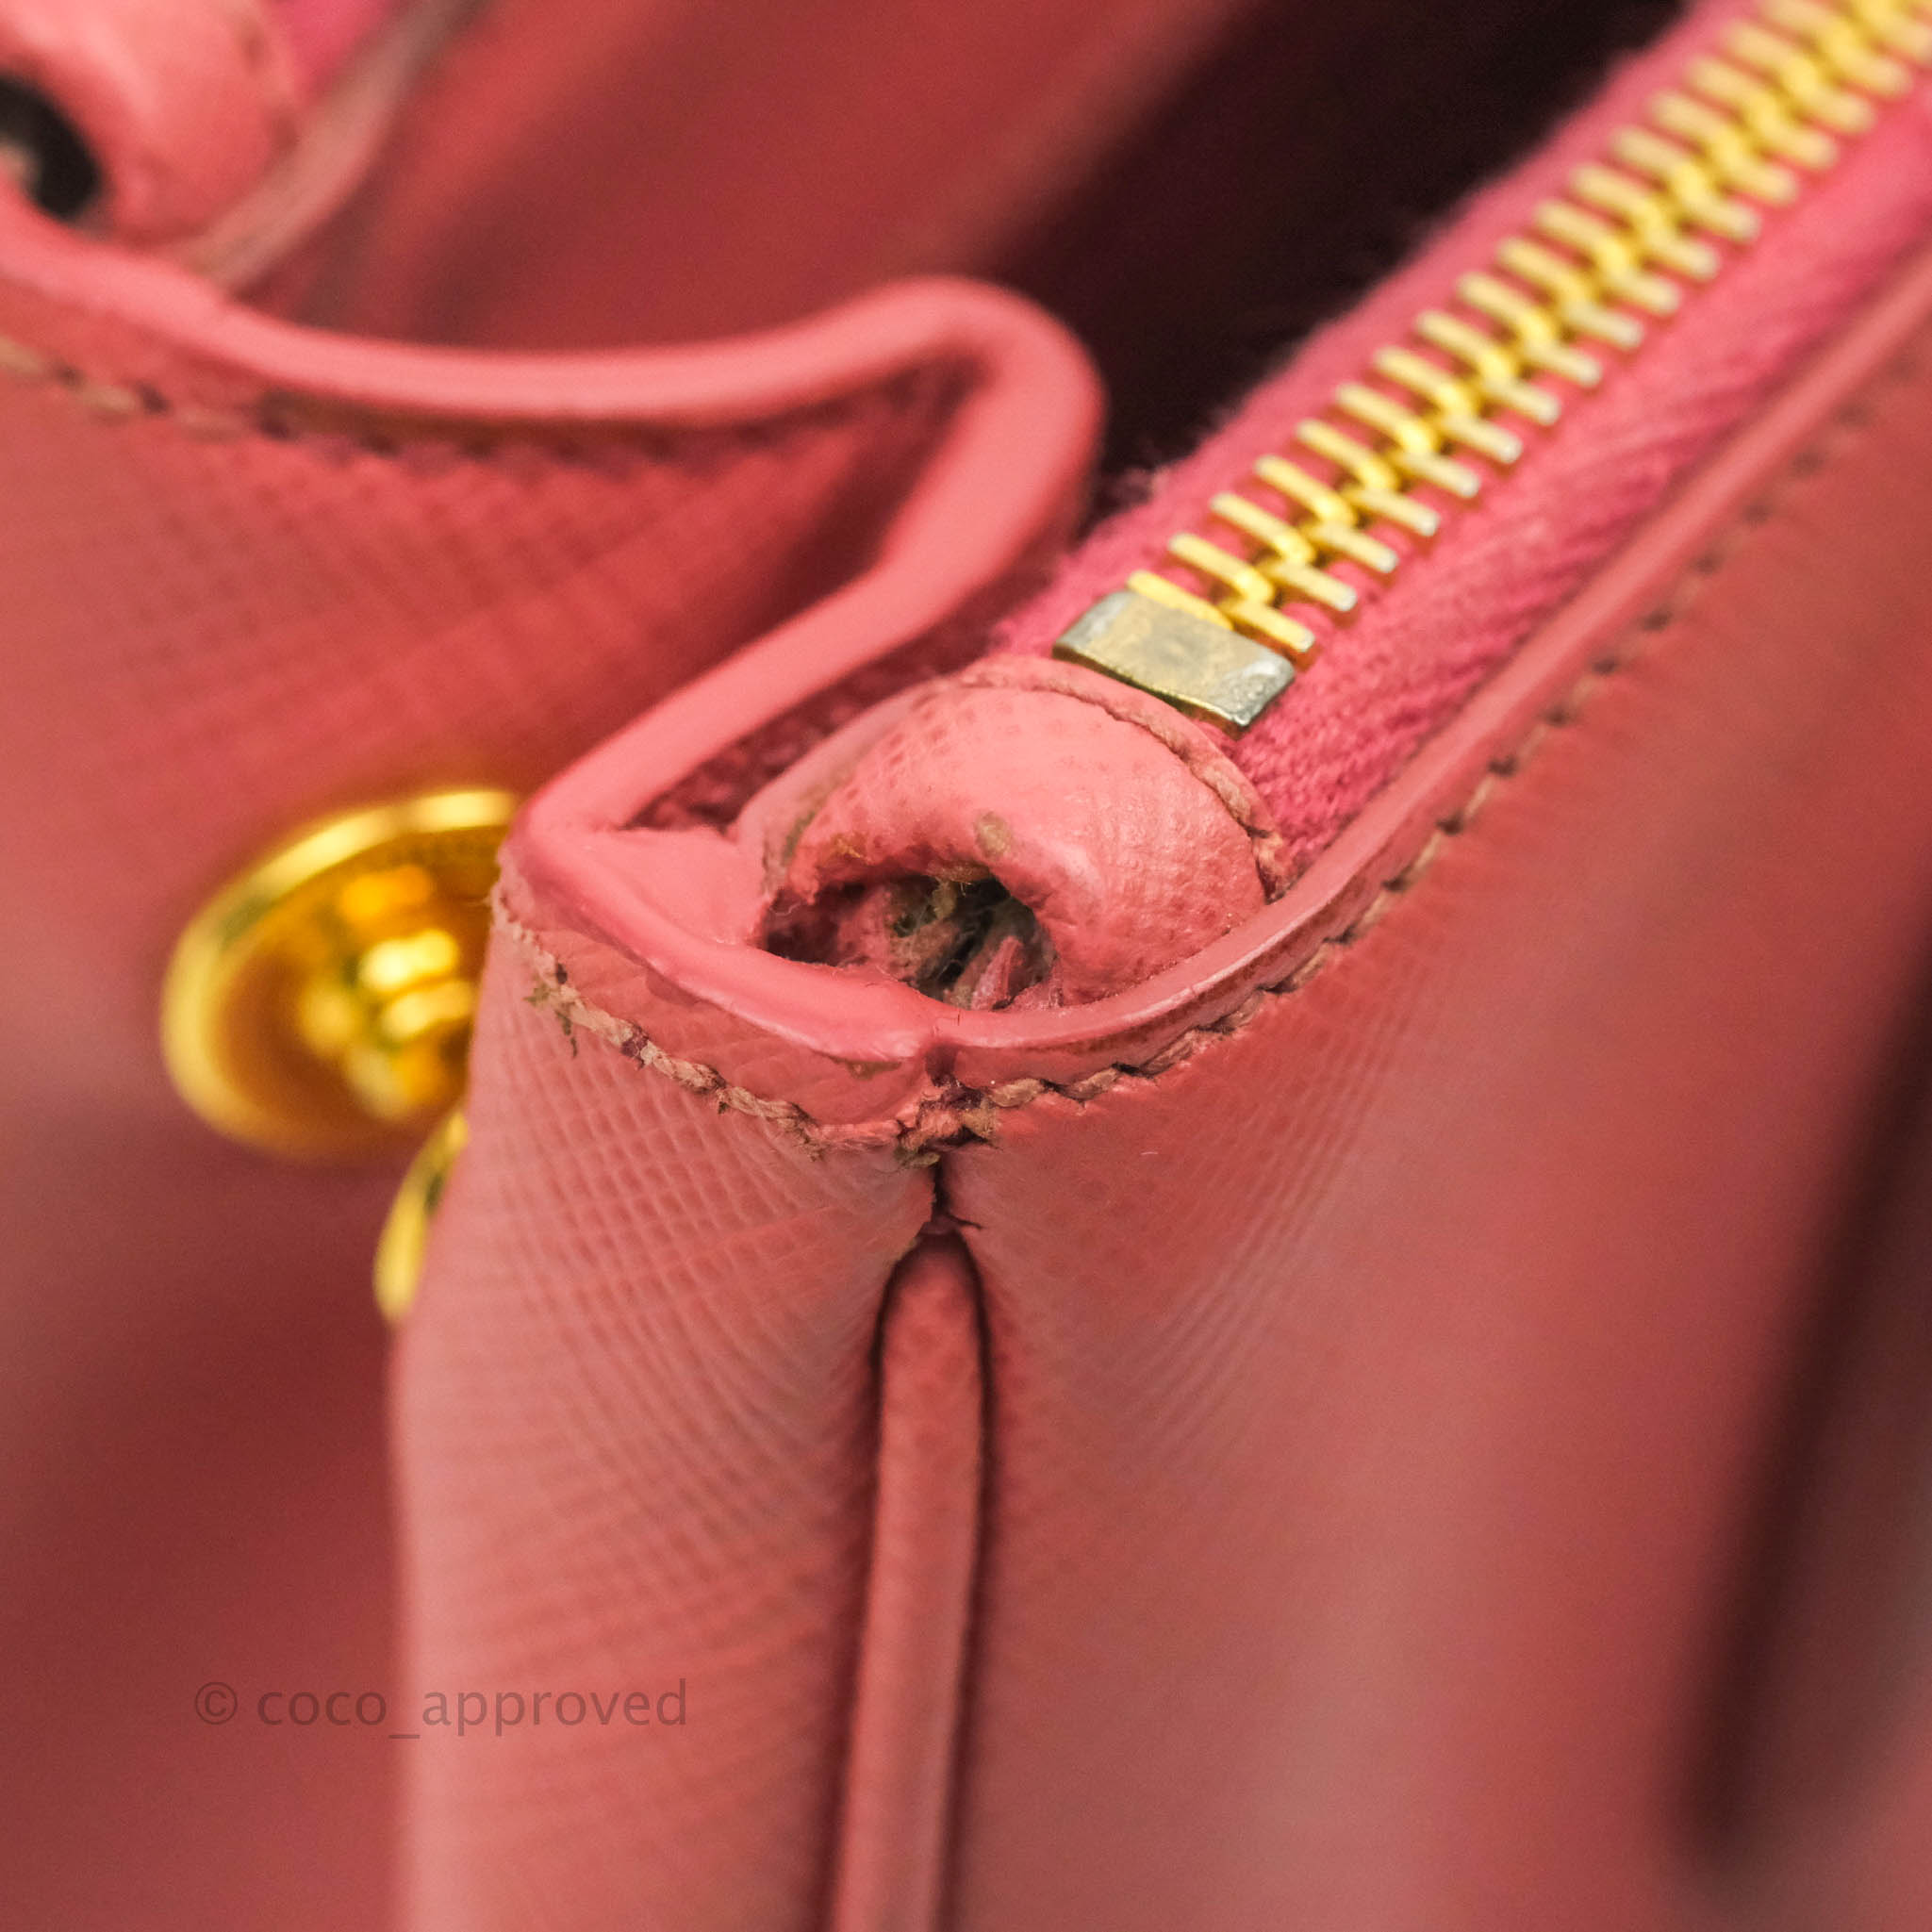 Galleria Saffiano Leather Medium Bag in Powder Pink – COSETTE